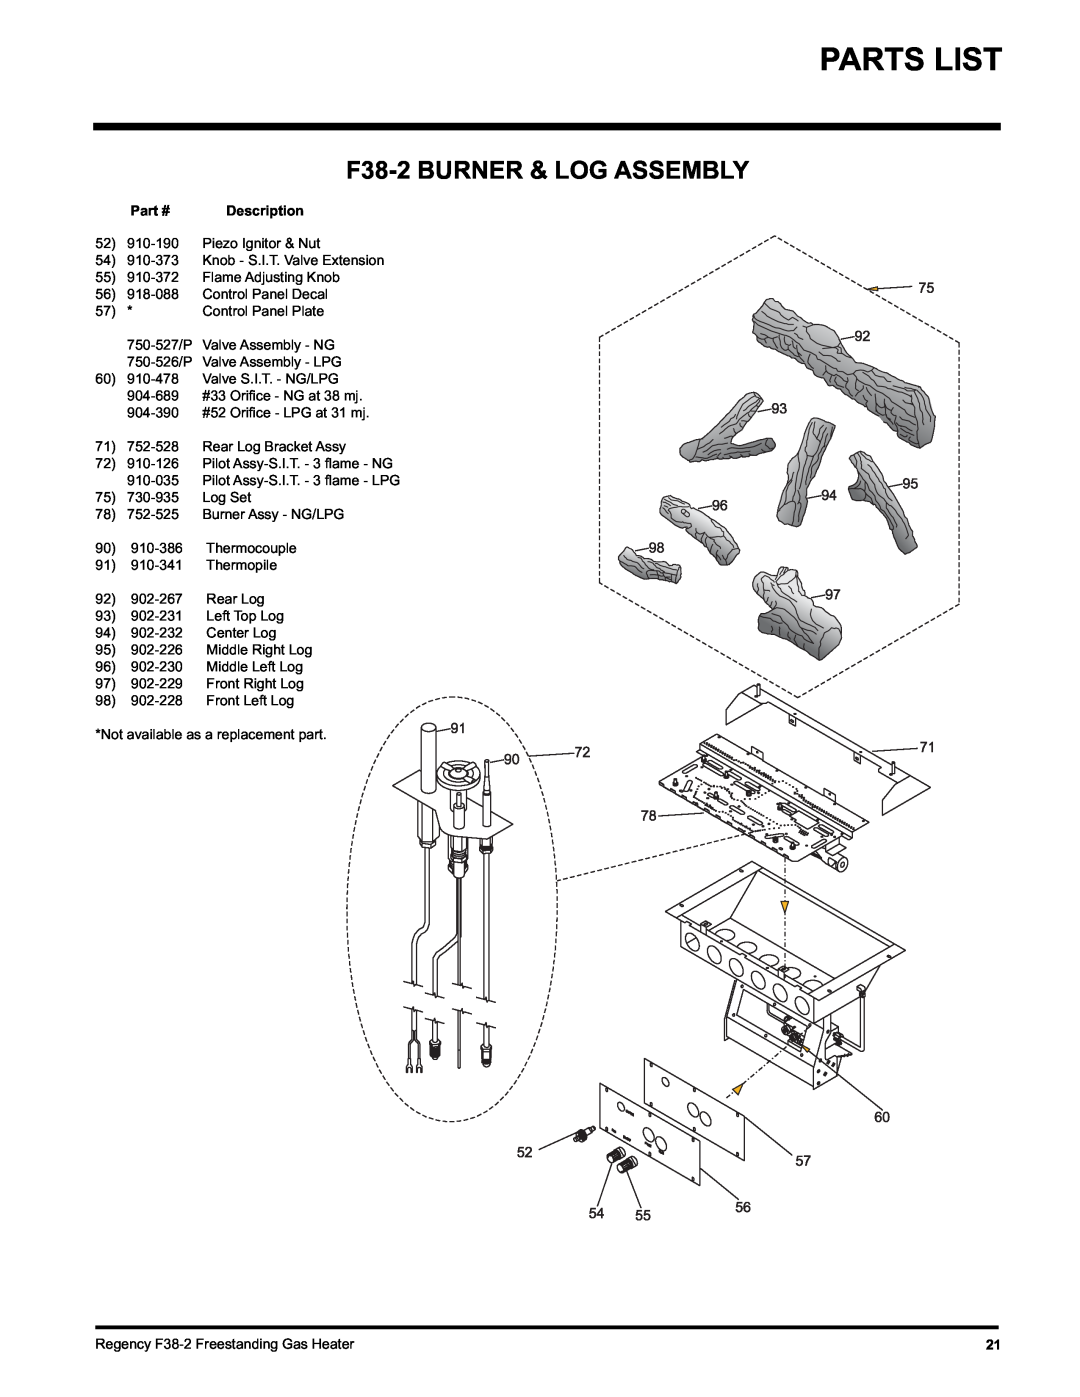 Regency Wraps F38-NG2, F38-LPG2 installation manual F38-2BURNER & LOG ASSEMBLY, Parts List 